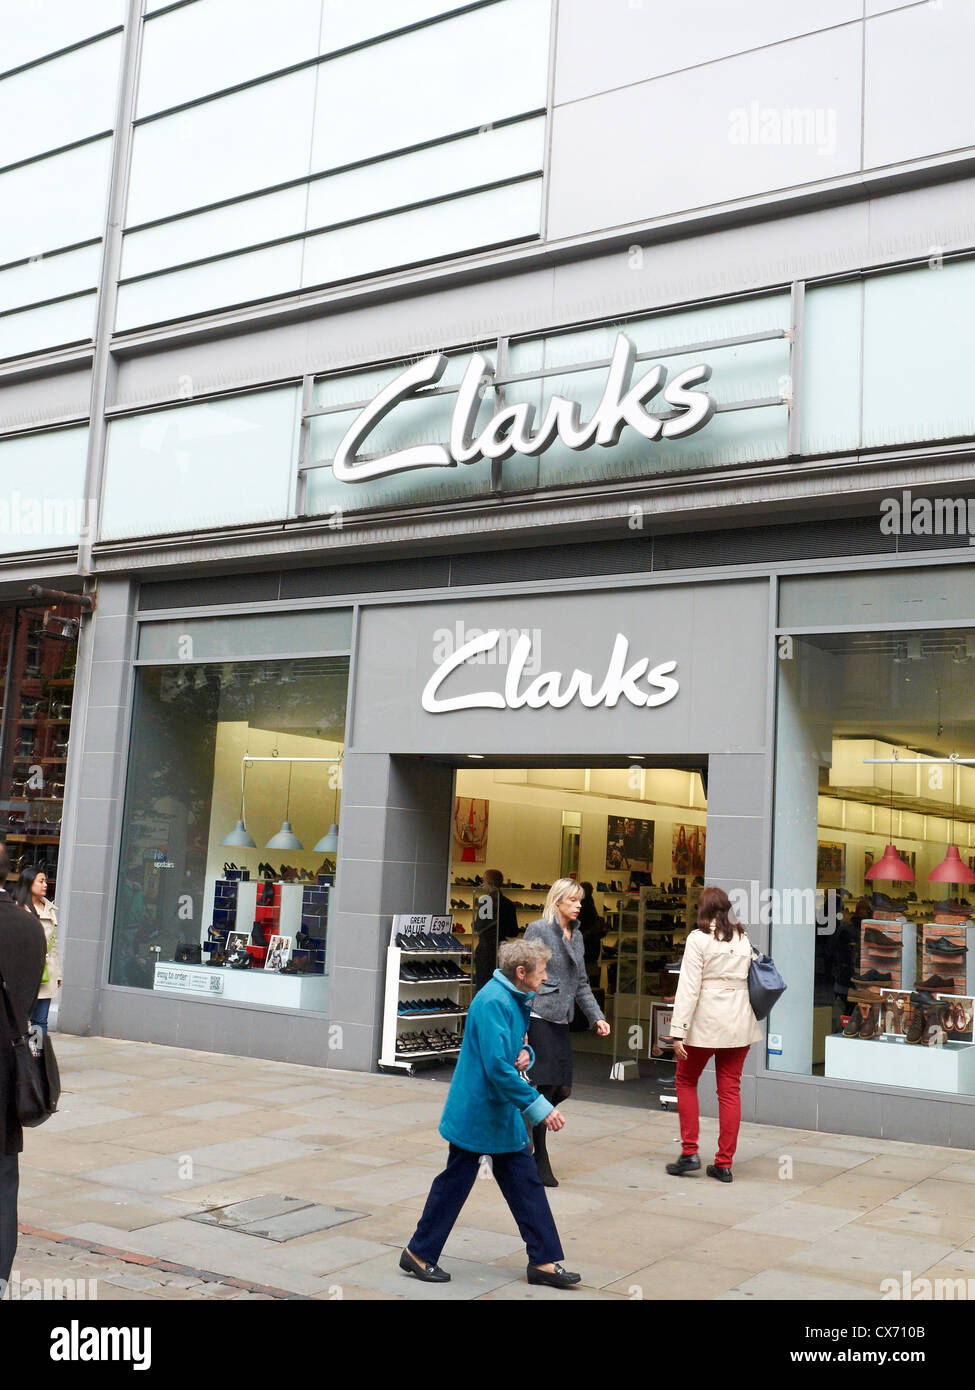 Clarks shop on Market Street UK Stock - Alamy